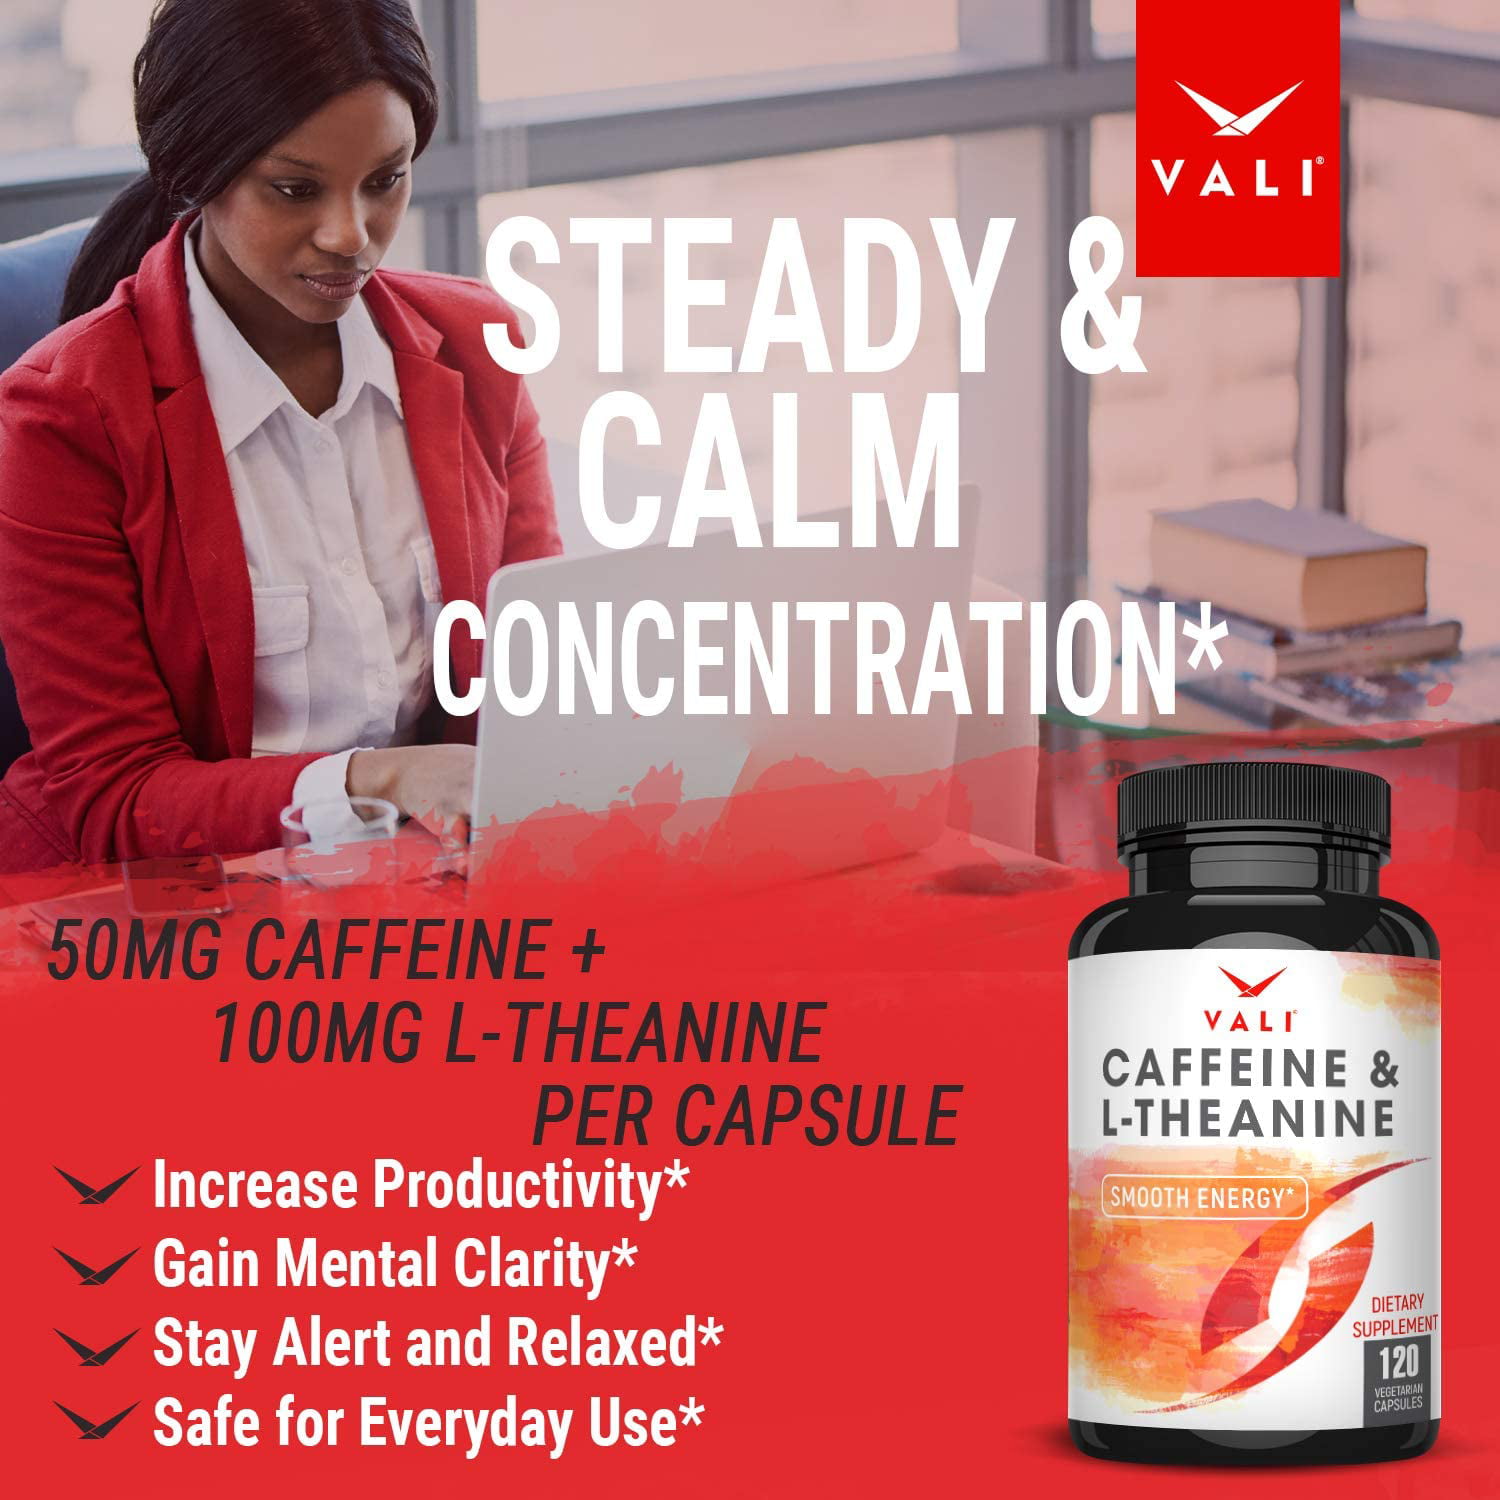 Caffeine pills for productivity